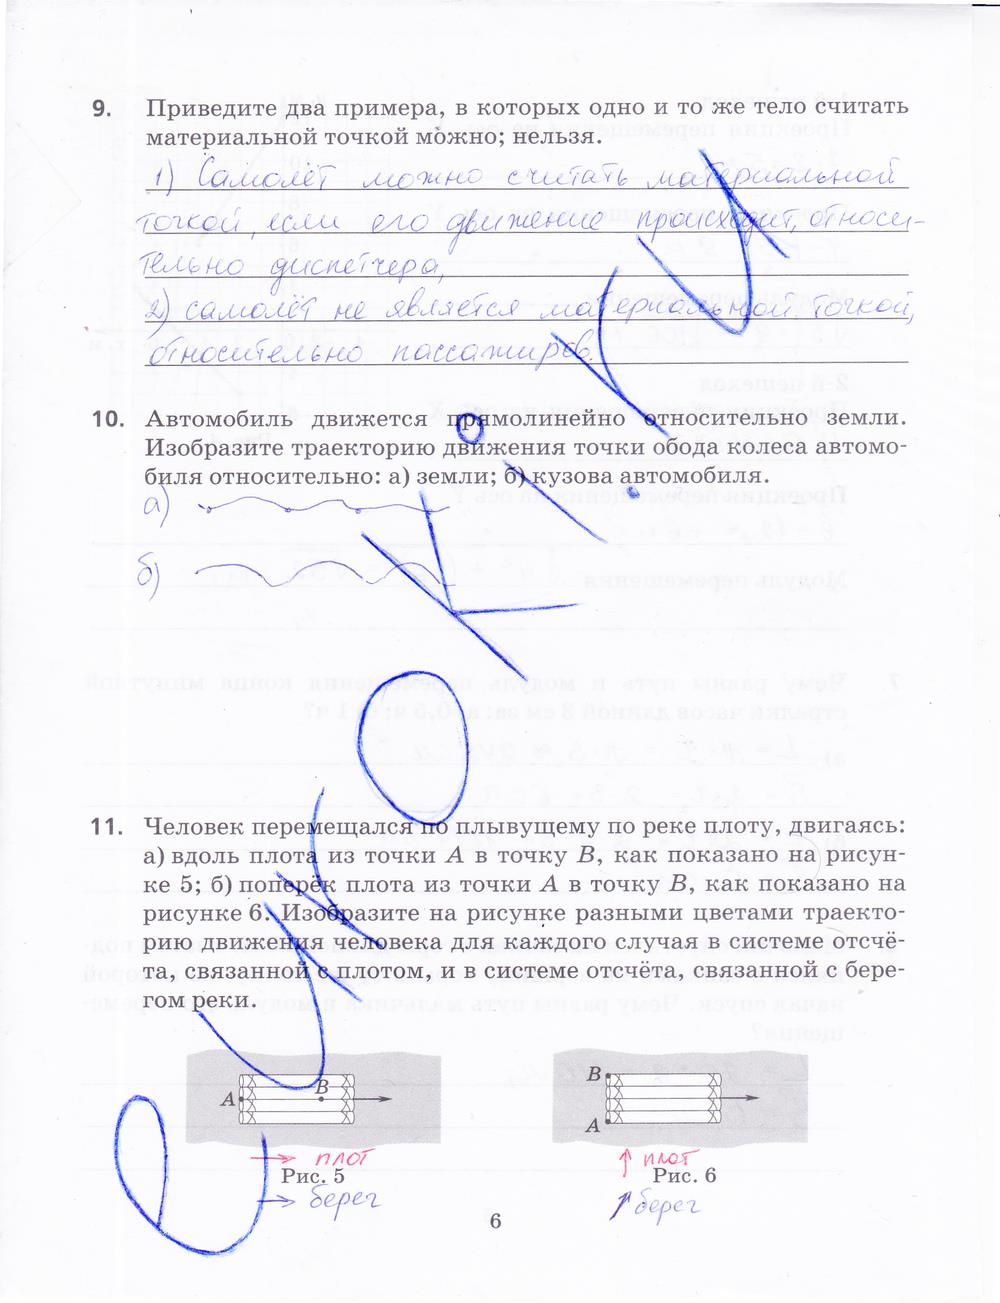 гдз 9 класс рабочая тетрадь страница 6 физика Пурышева, Важеевская, Чаругин